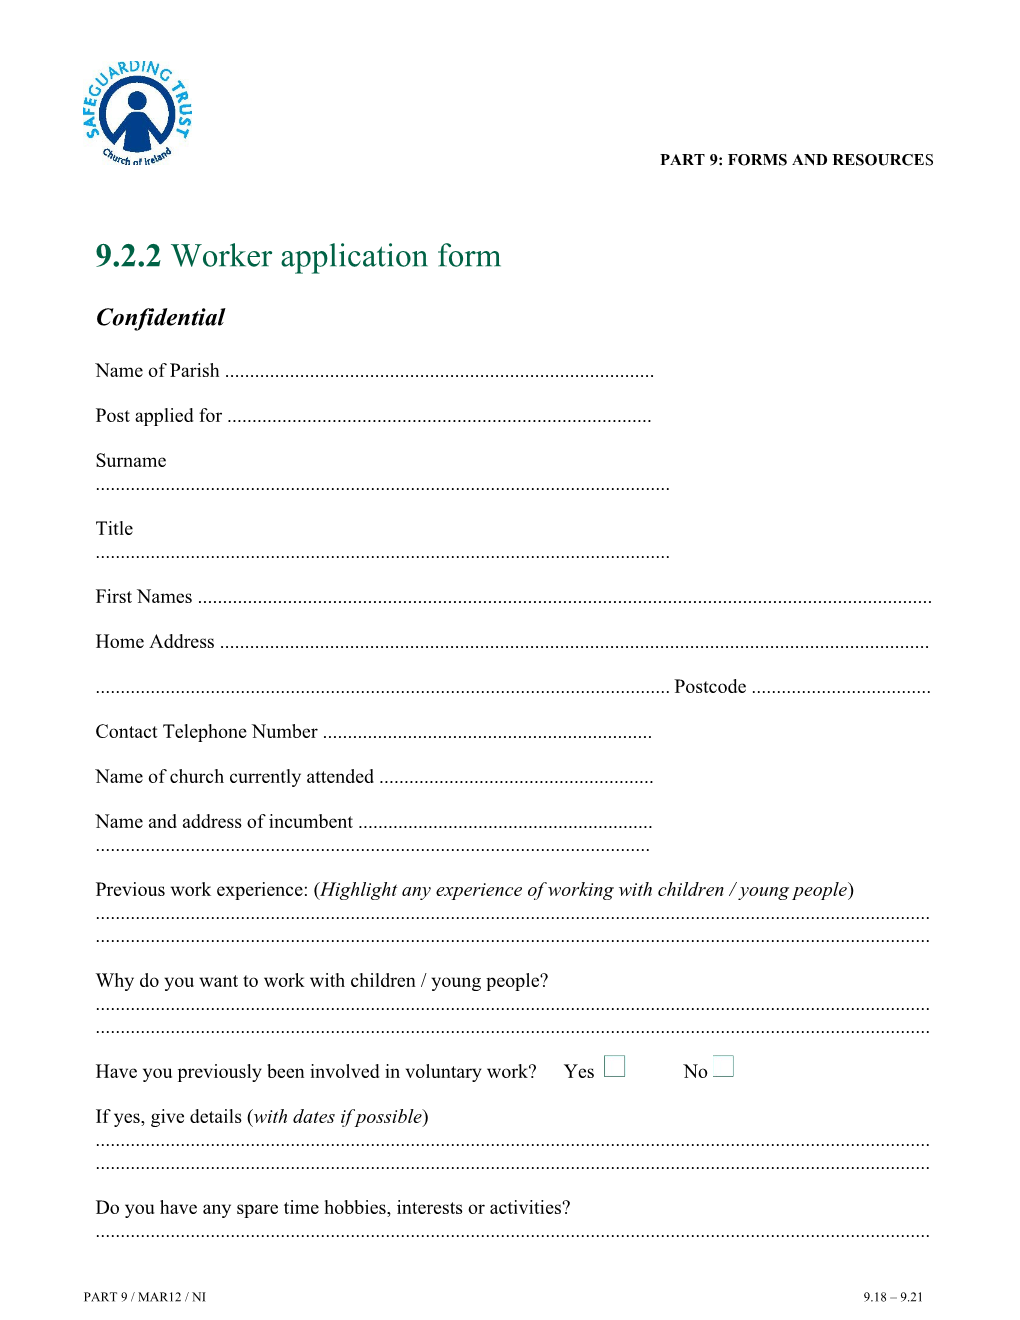 9.2.2 Worker Application Form